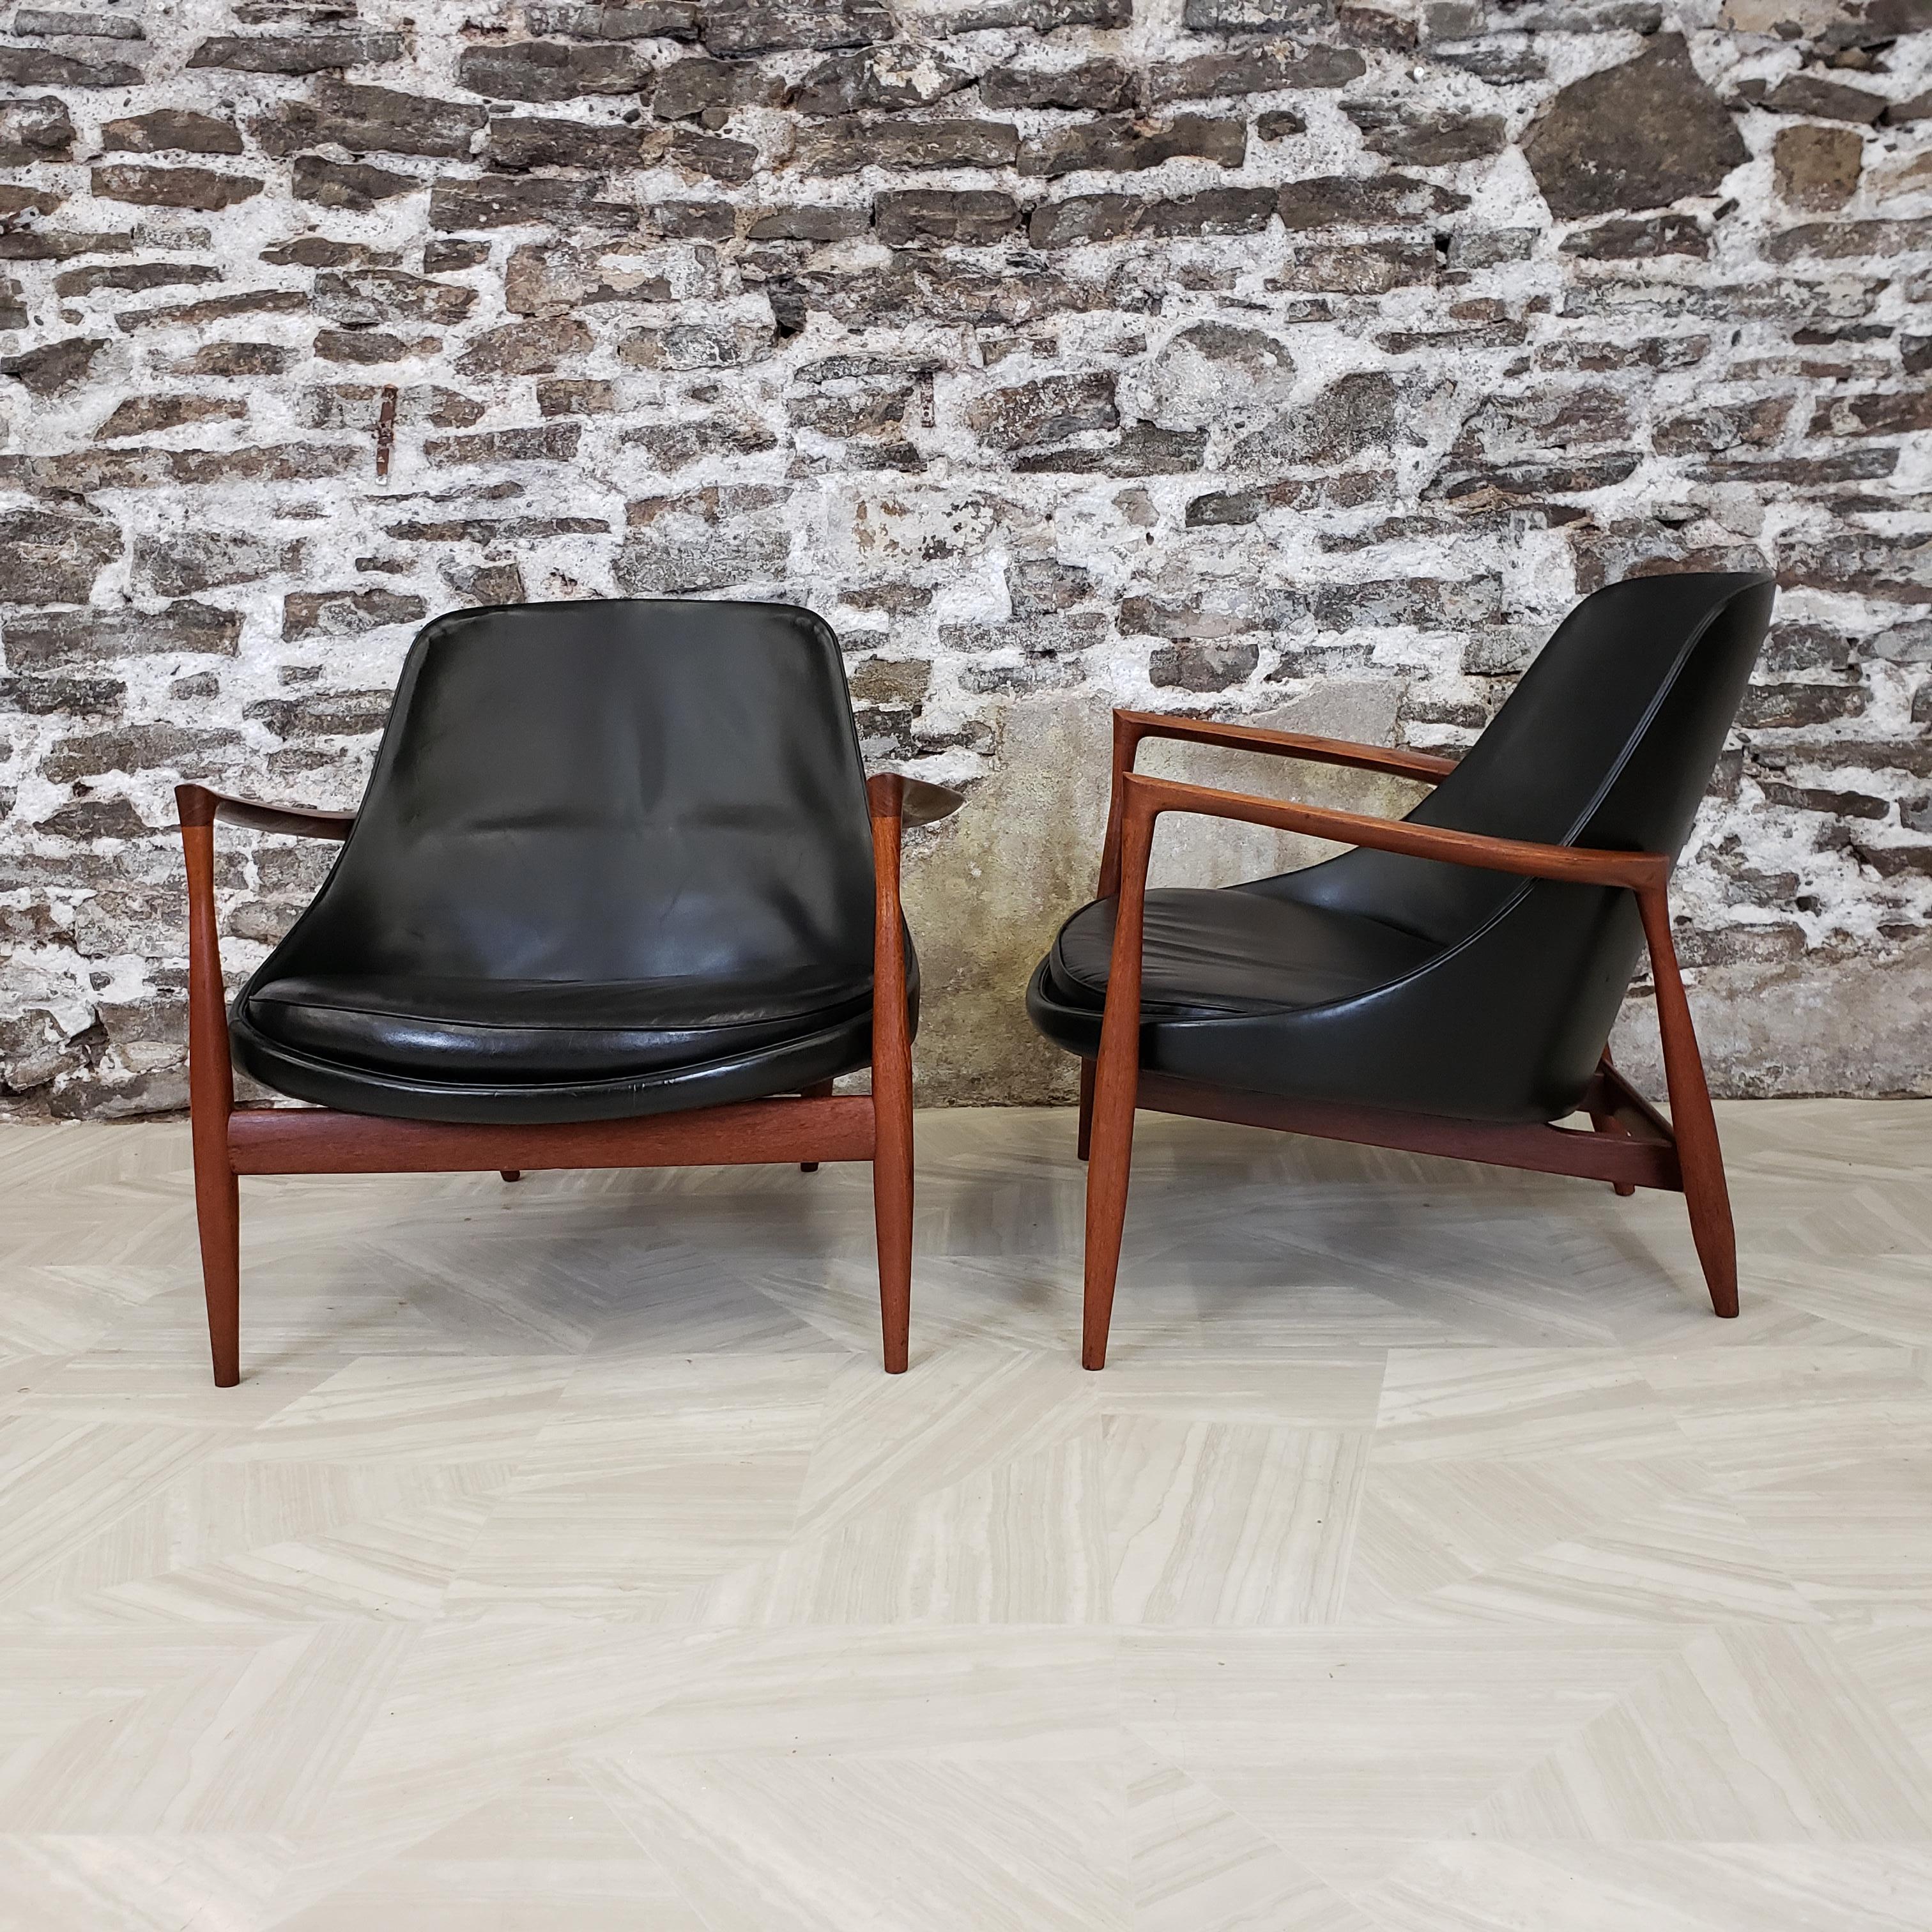 Scandinavian Modern Pair of Elizabeth Chairs by Ib Kofod-Larsen Model U-56 For Sale